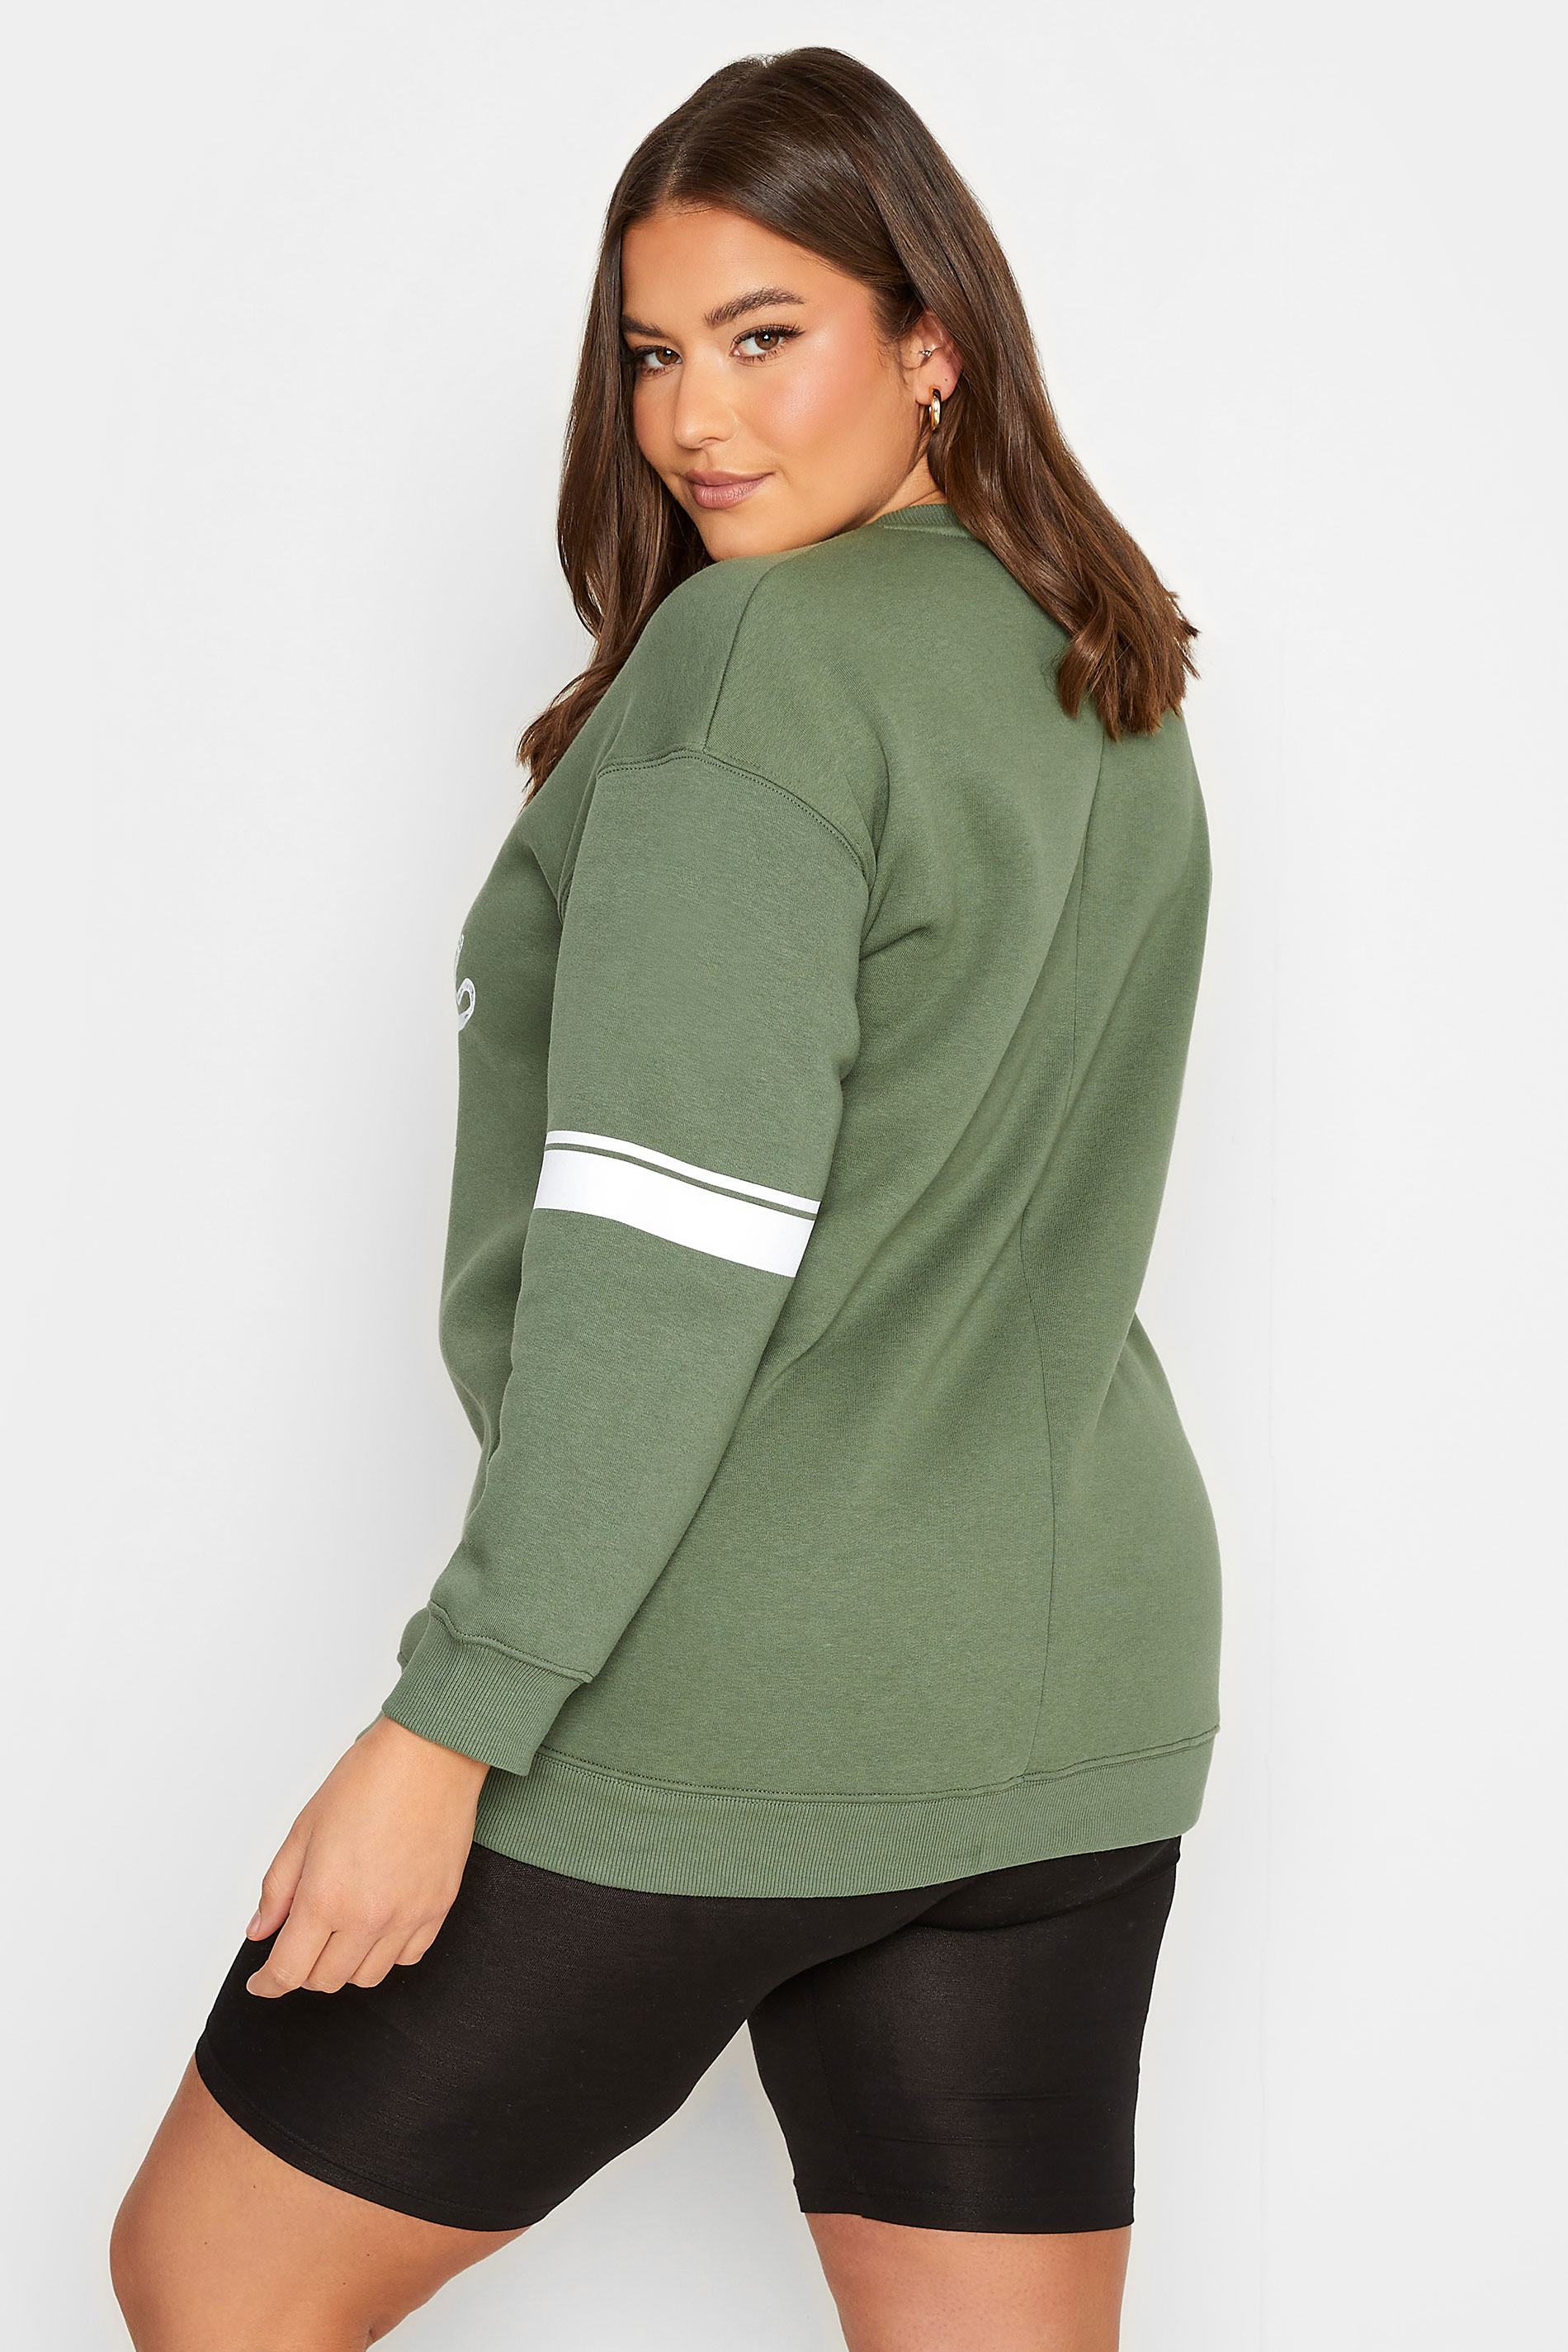 YOURS Plus Size Curve Khaki Green 'California' Slogan Sweatshirt | Yours Clothing  3